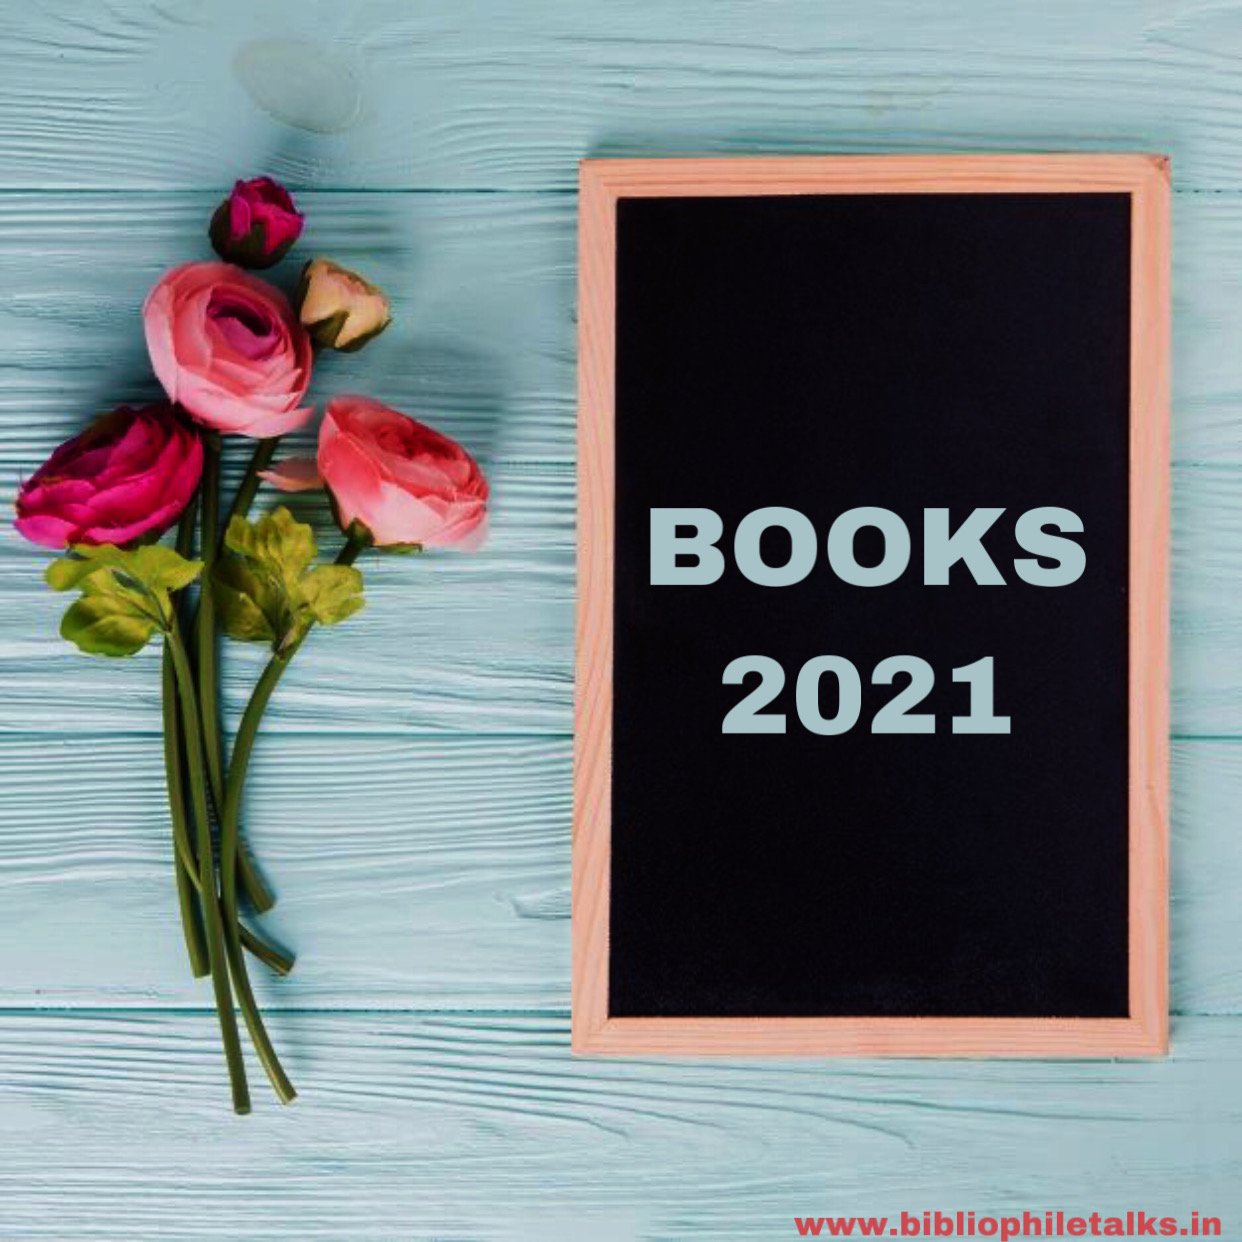 BOOKS 2021